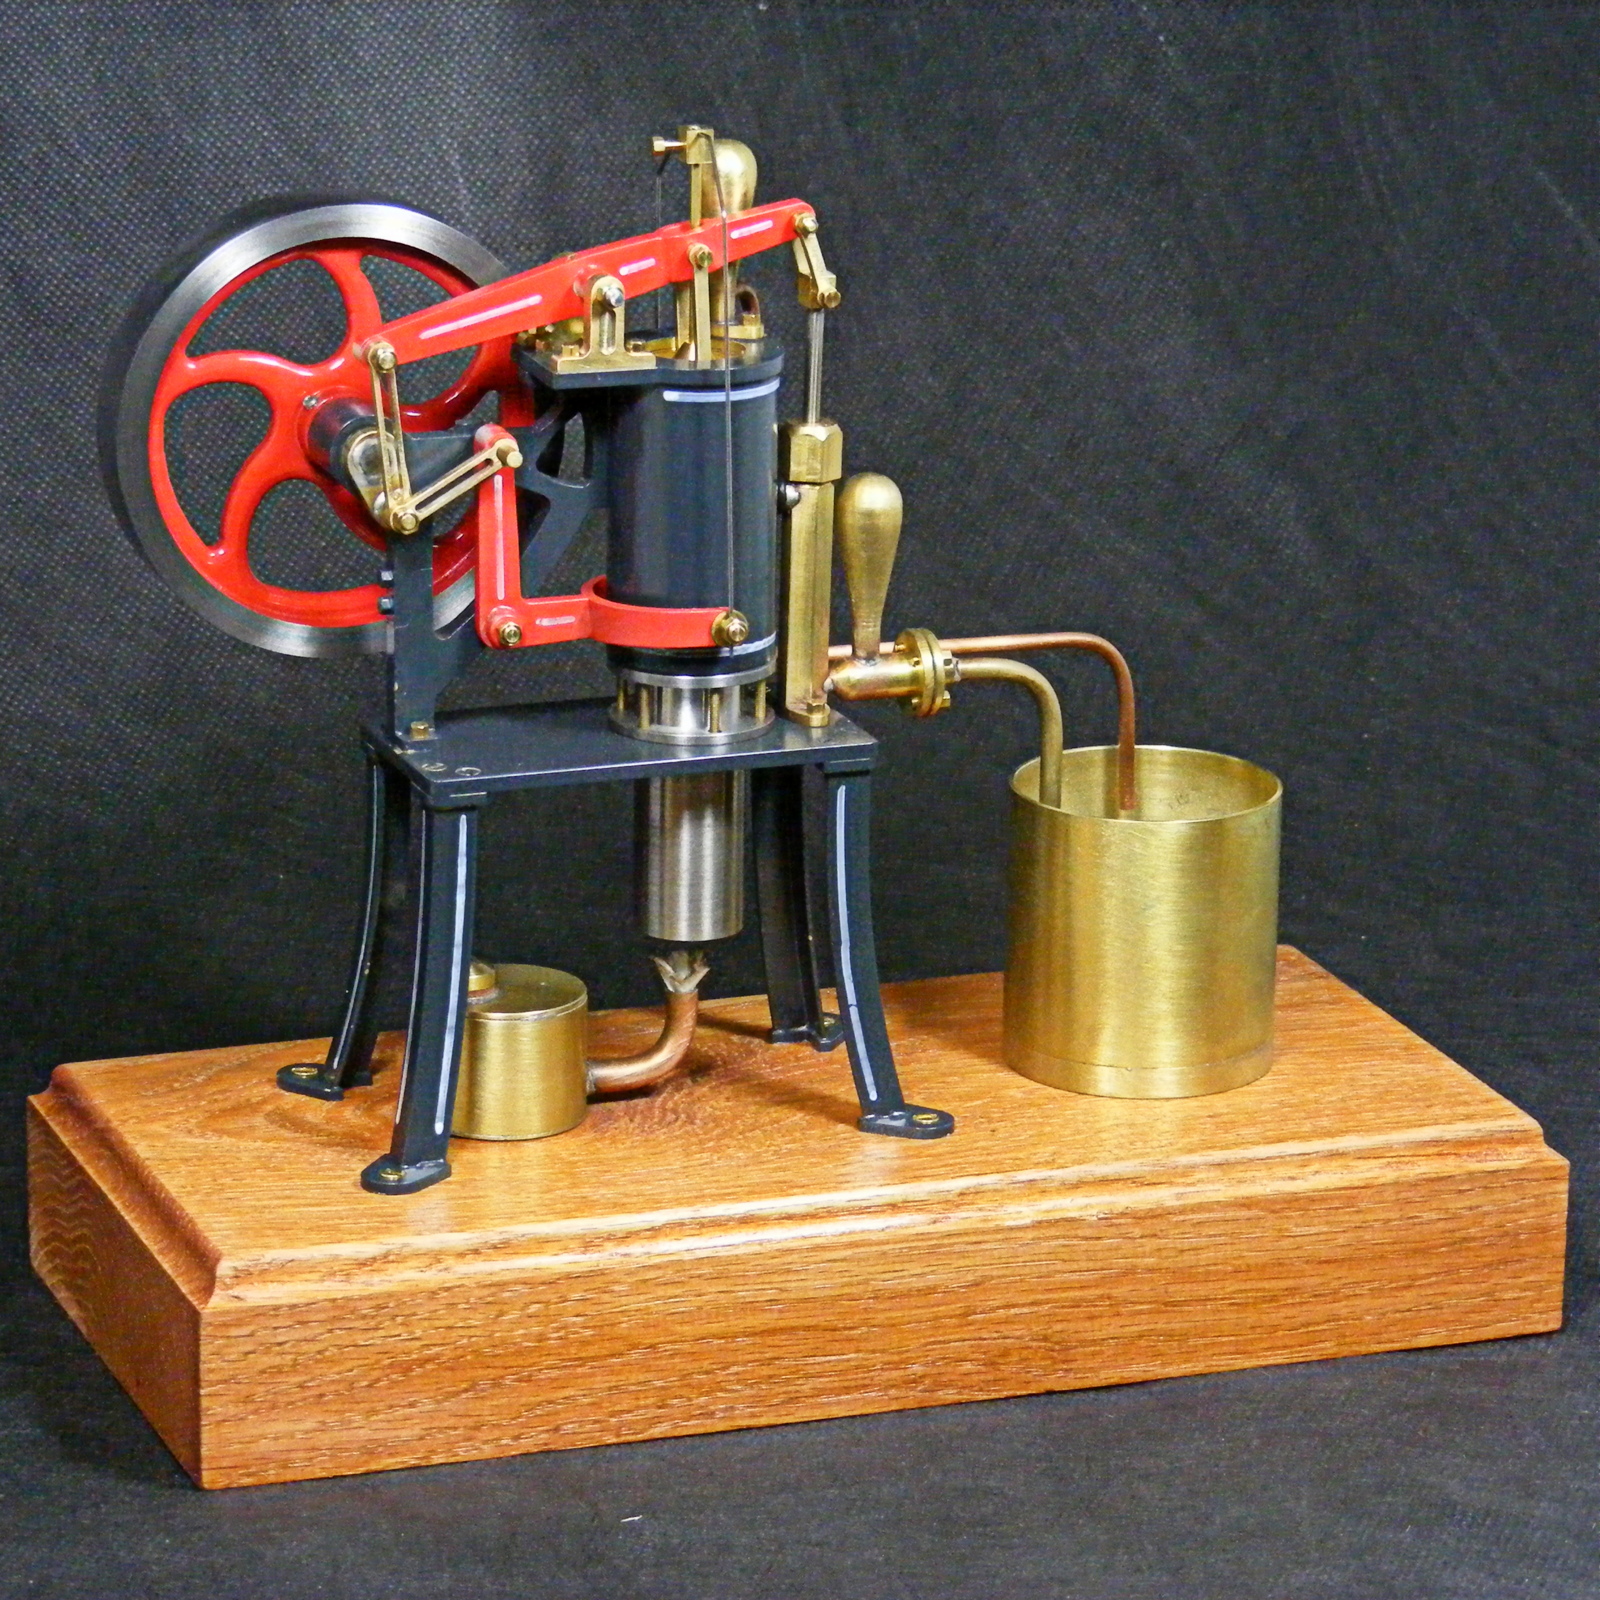 Ericsson Hot Air Pump Stirling engine